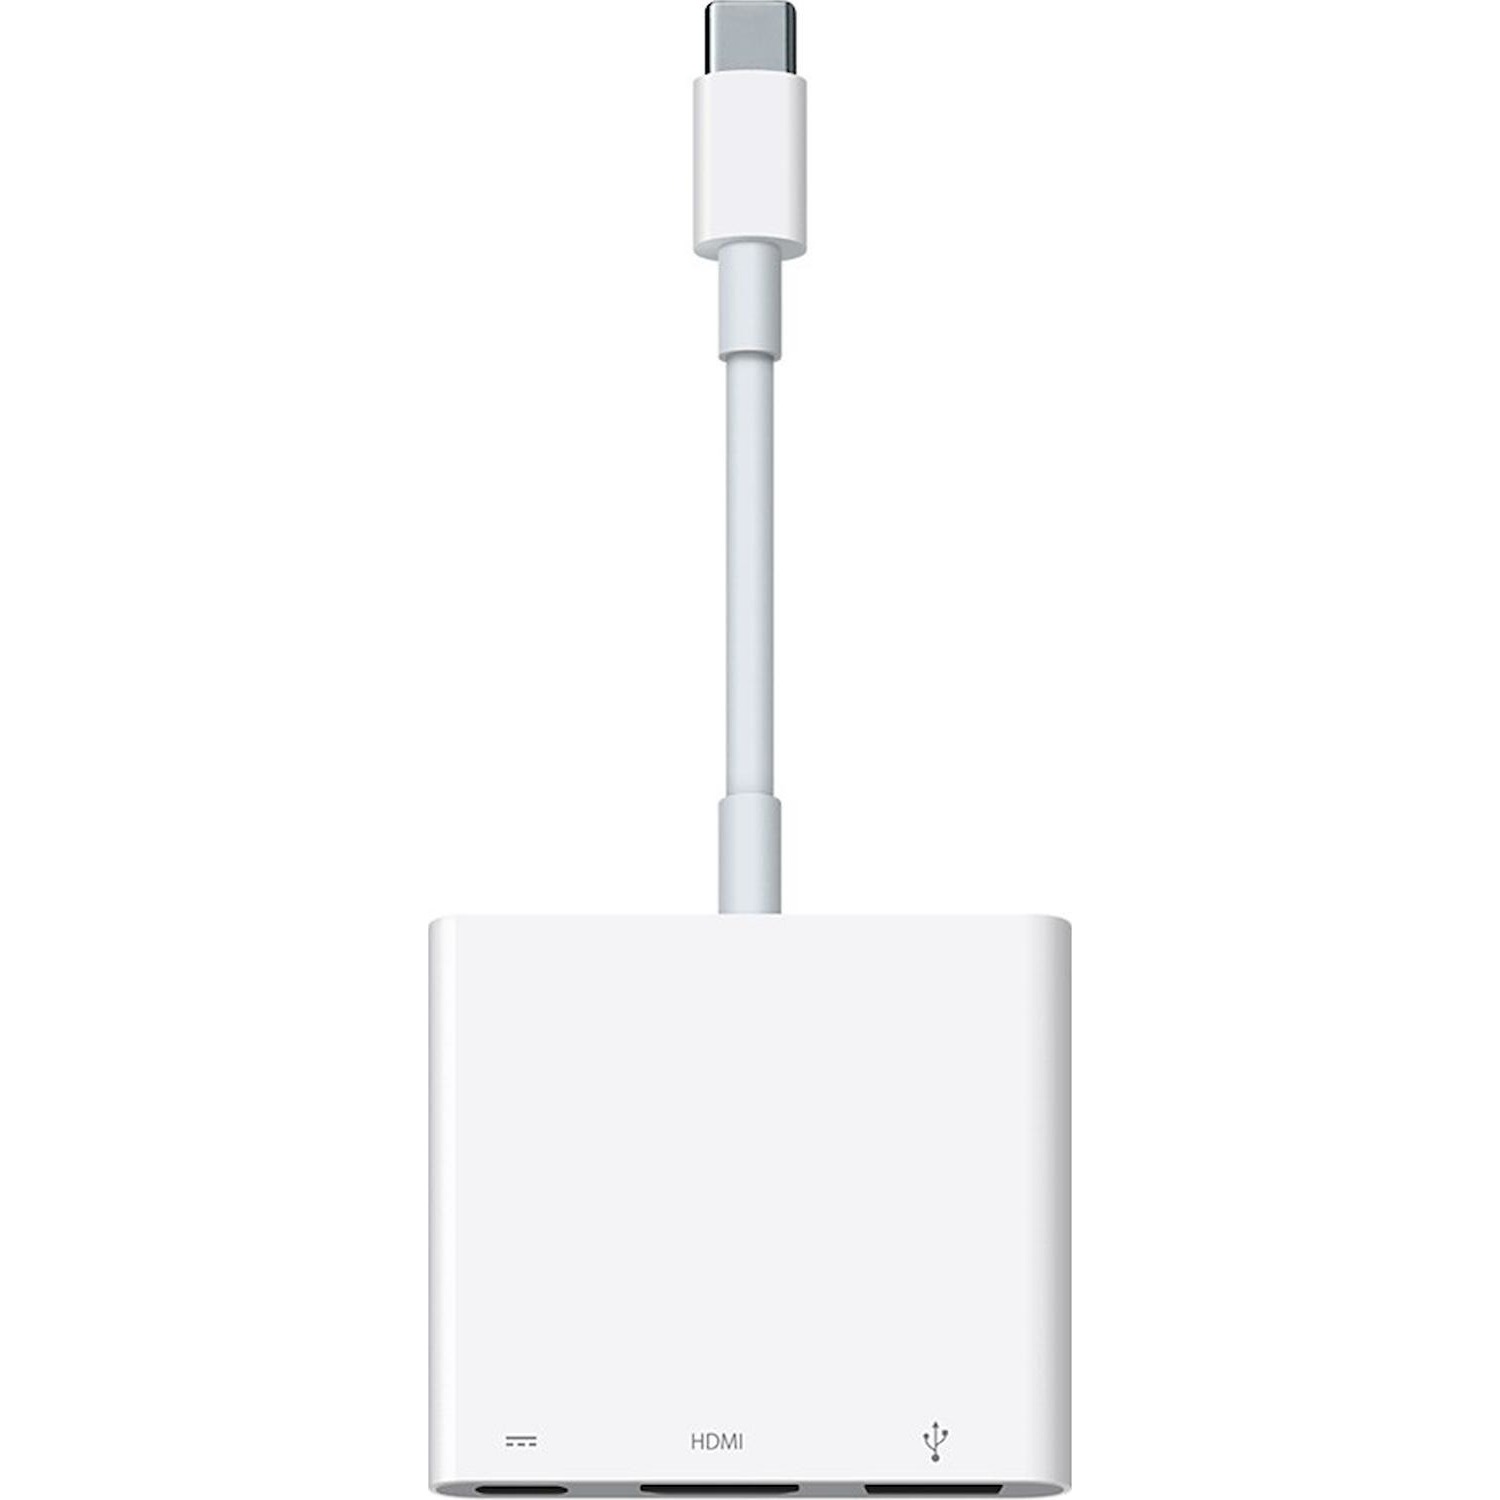 Immagine per Adattatore Apple multiporta da USB-C a AV digitaleUSB-C to USB-C/HDMI/USB 3.0 da DIMOStore